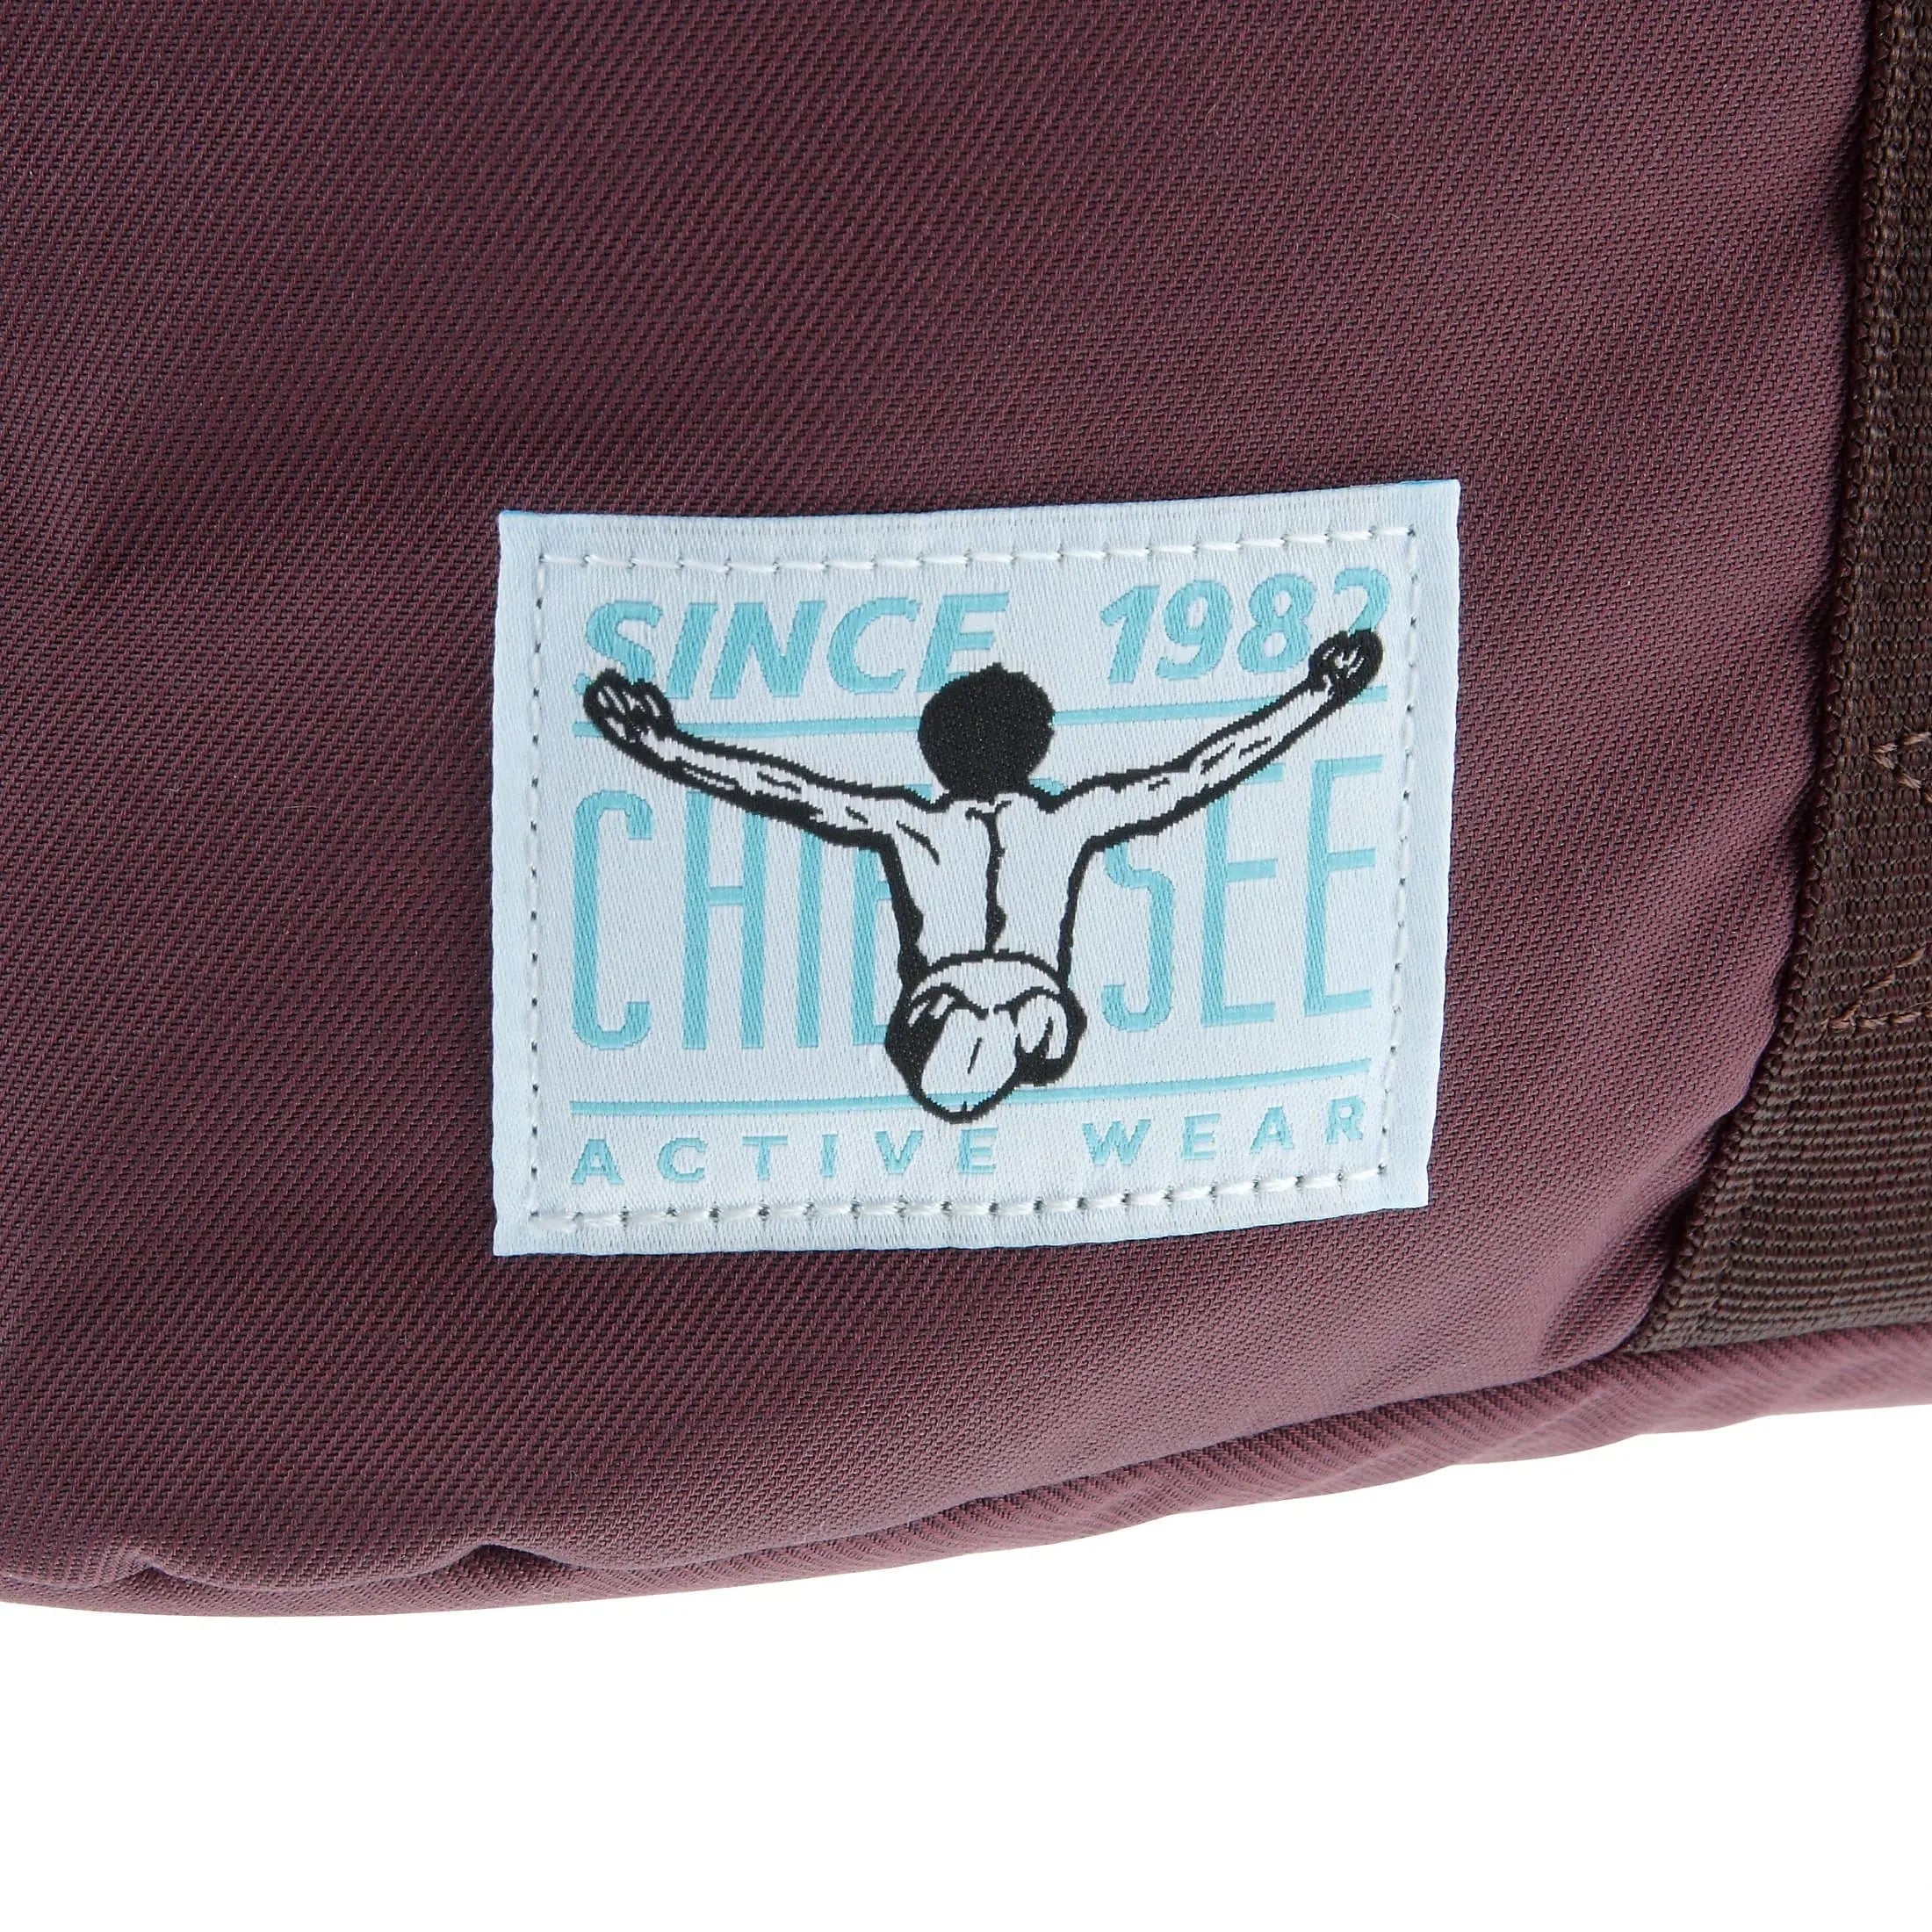 Chiemsee Urban Explorer Oslo backpack 50 cm - magnet melange